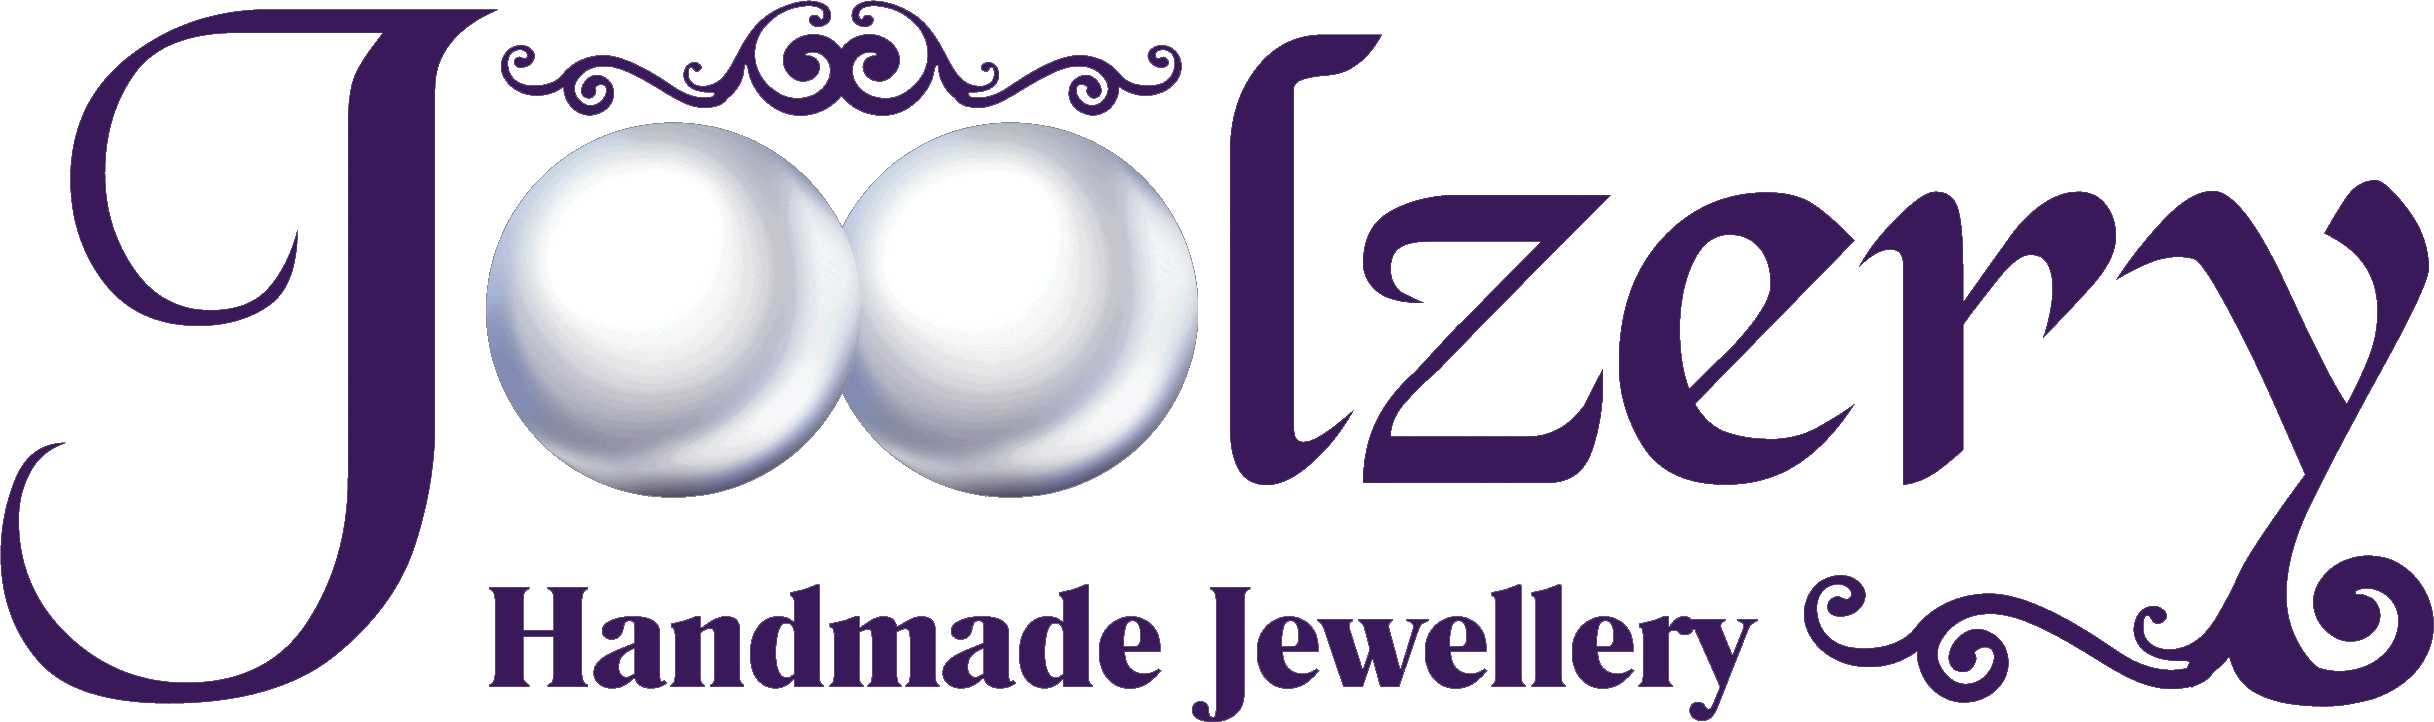 Joolzery Handmade Jewellery Logo